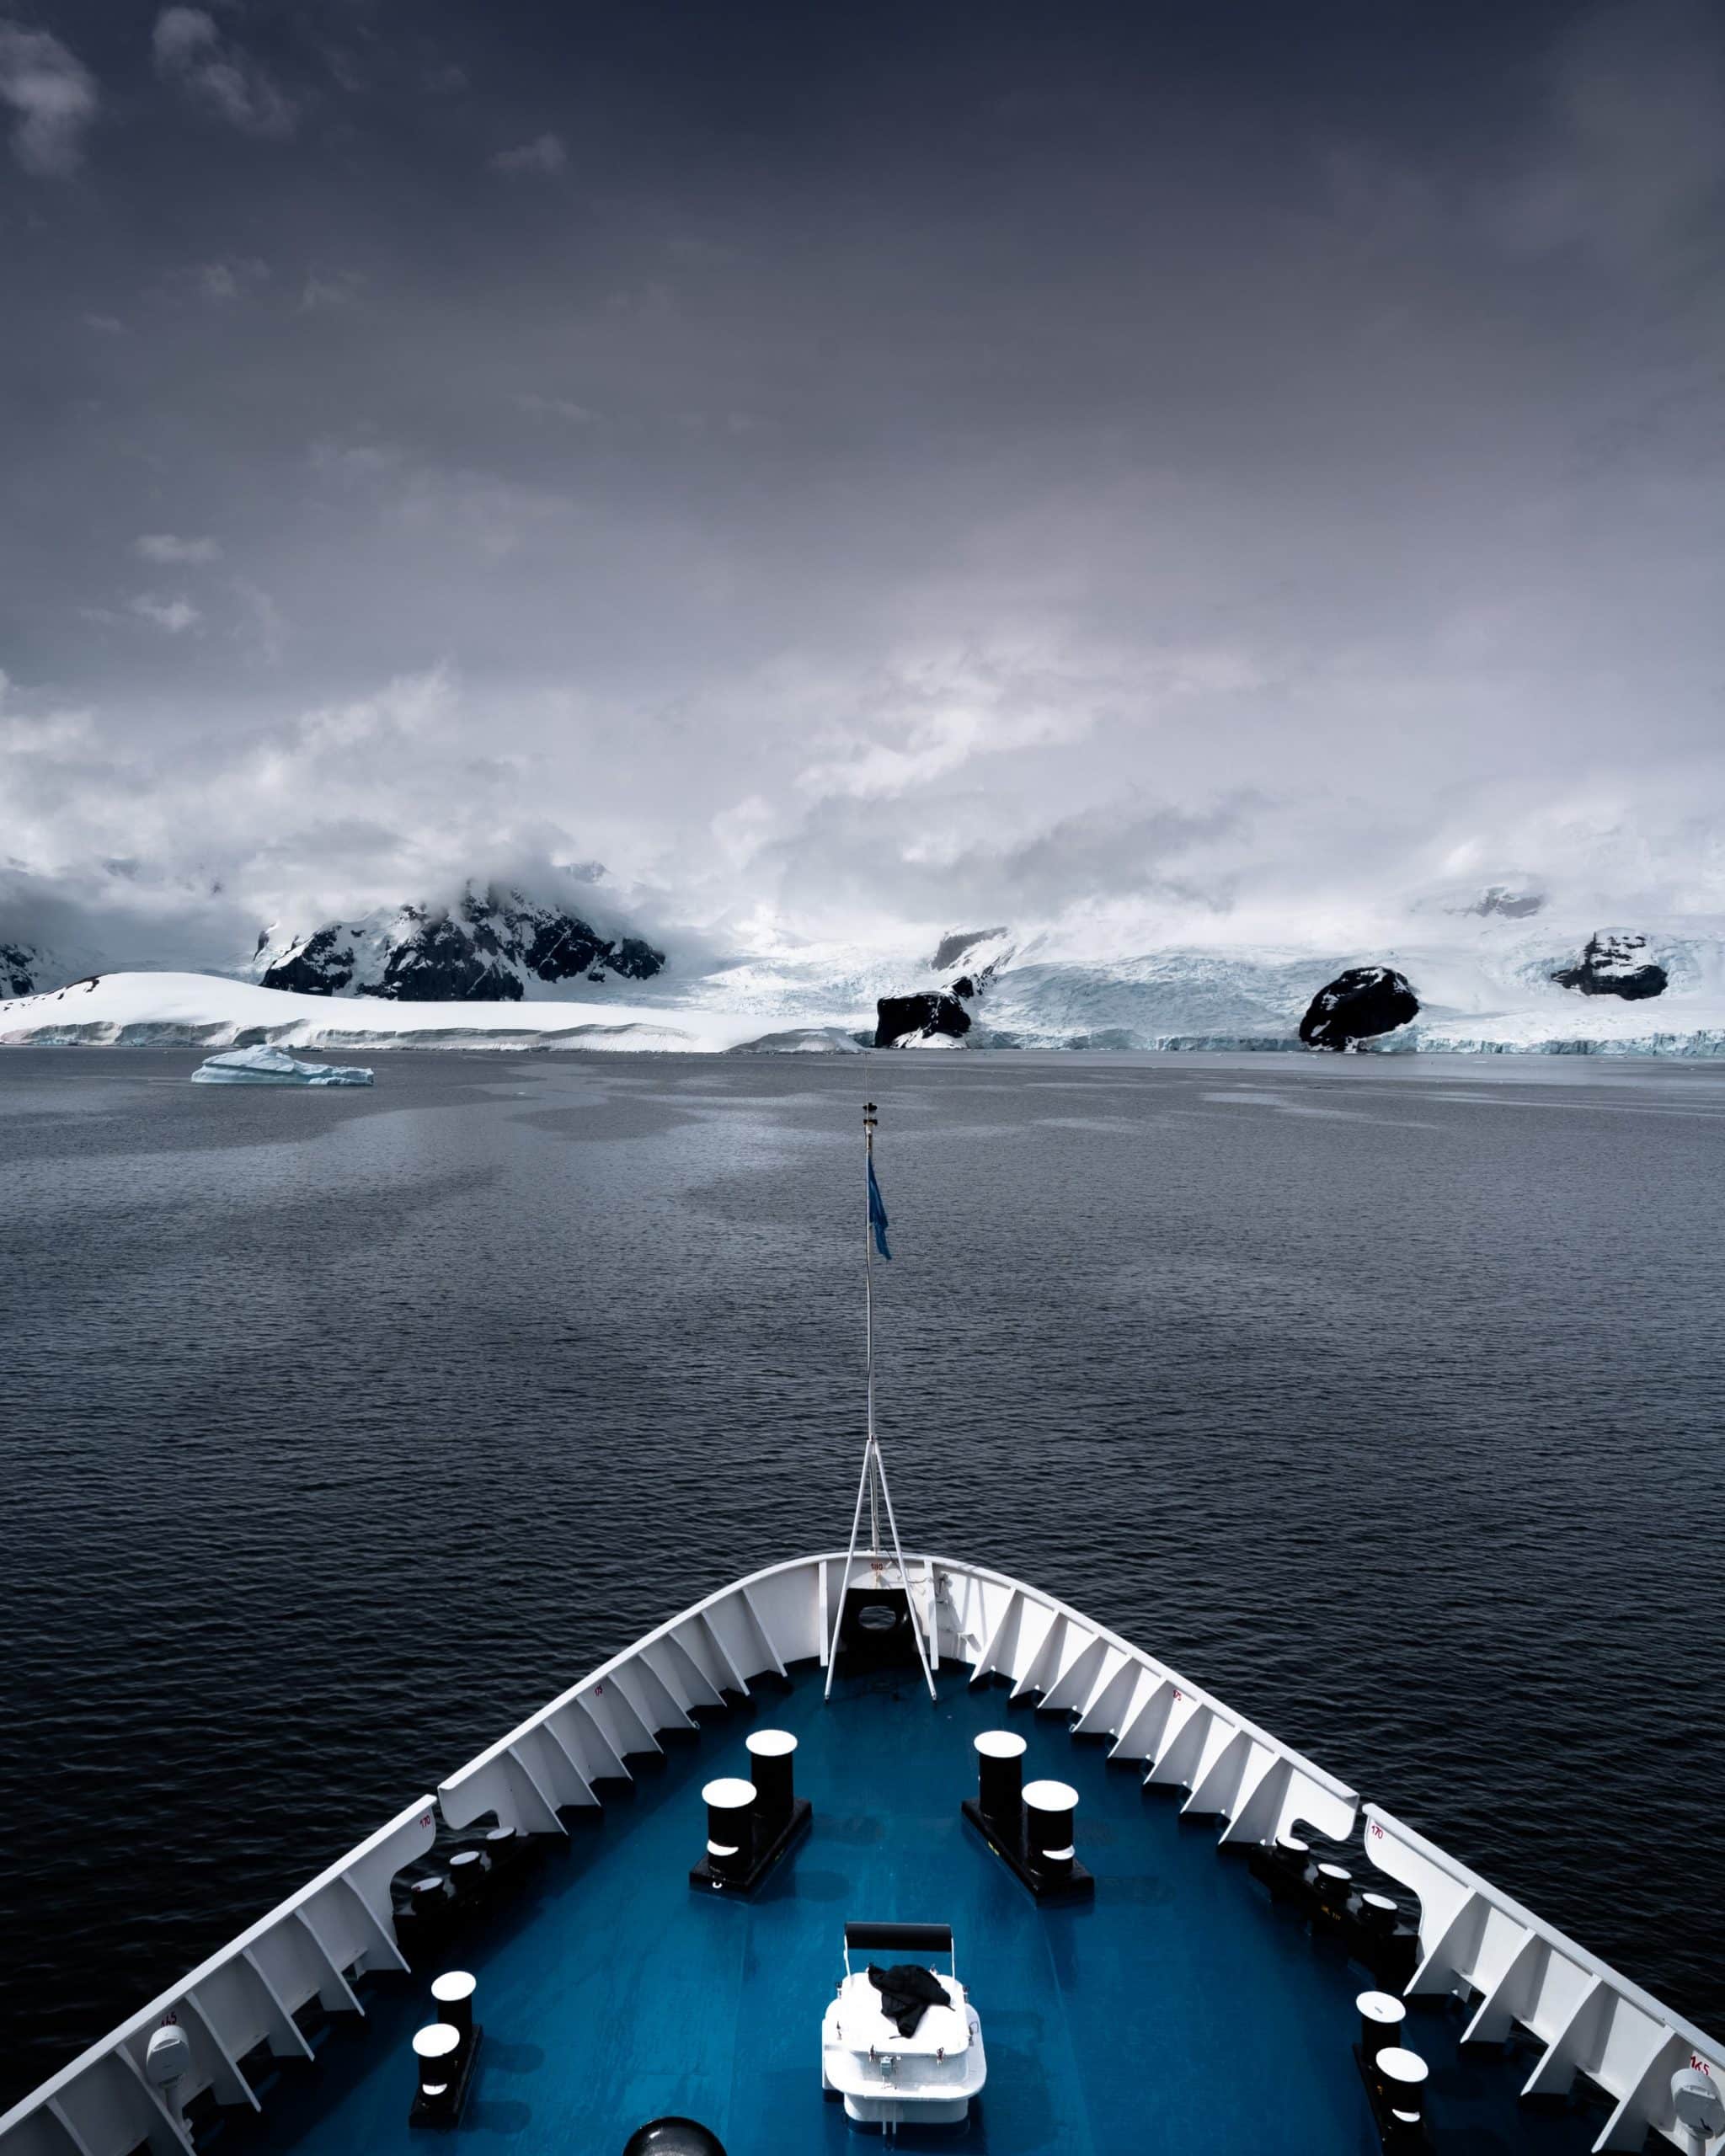 james eades rlAtmdJgnyQ unsplash scaled | Antarctica | Wereldreizigers.nl